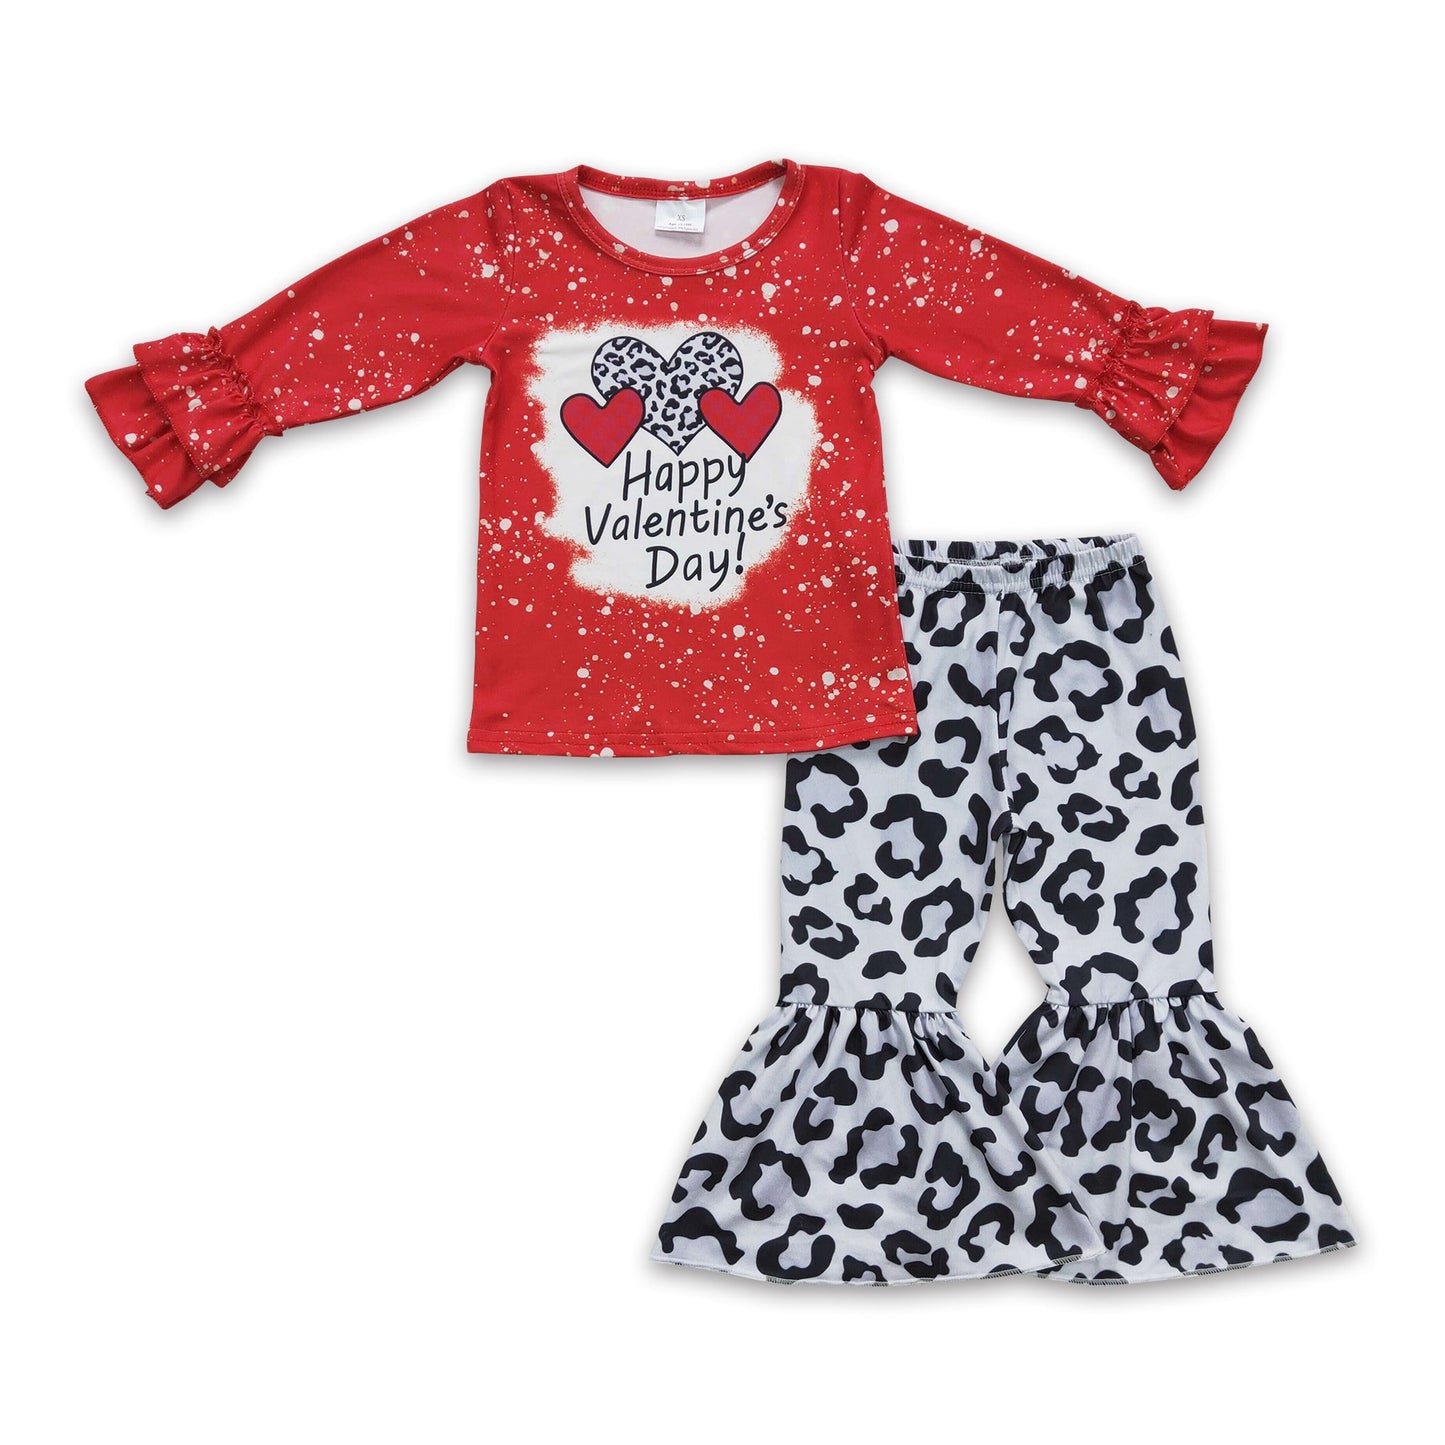 Happy valentine's day shirt leopard pants girls boutique clothing set